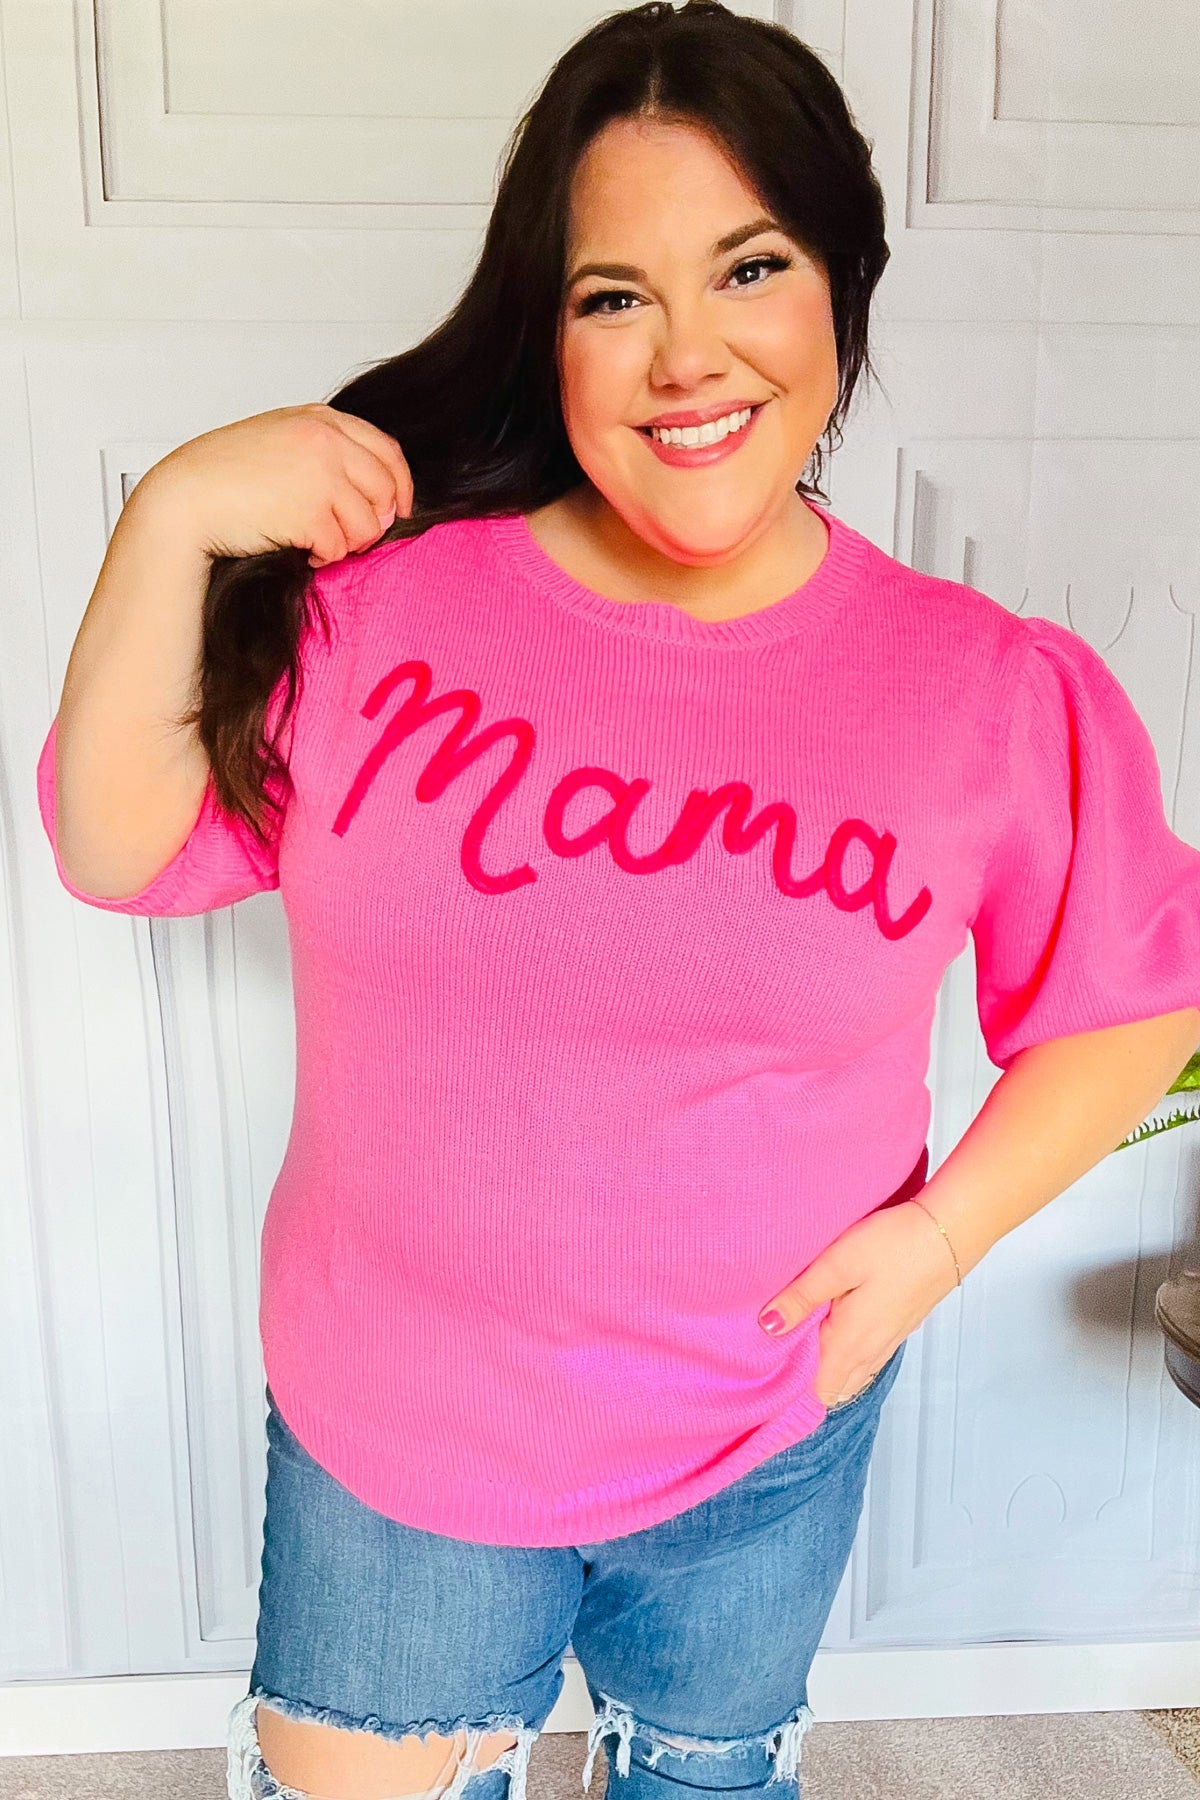 Take A Bow "Mama" Embroidery Sweater